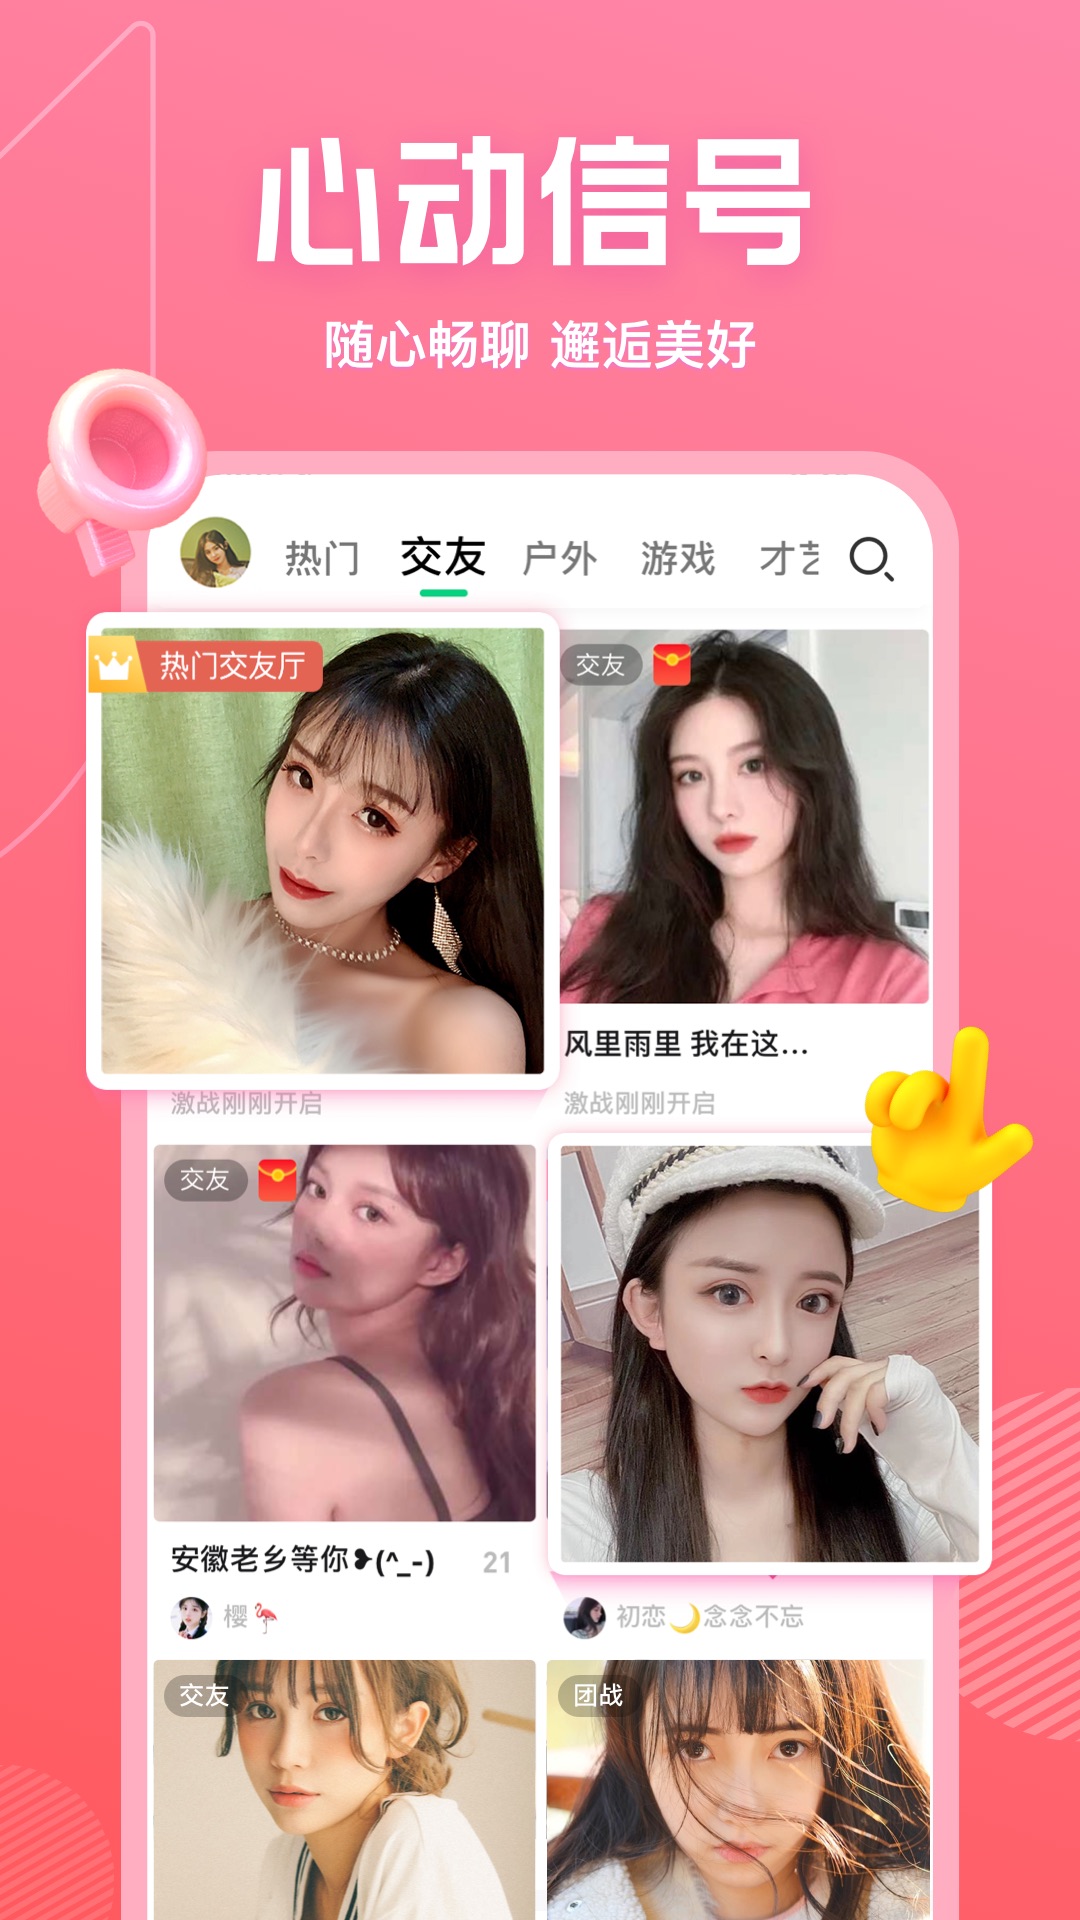 NOW交友app